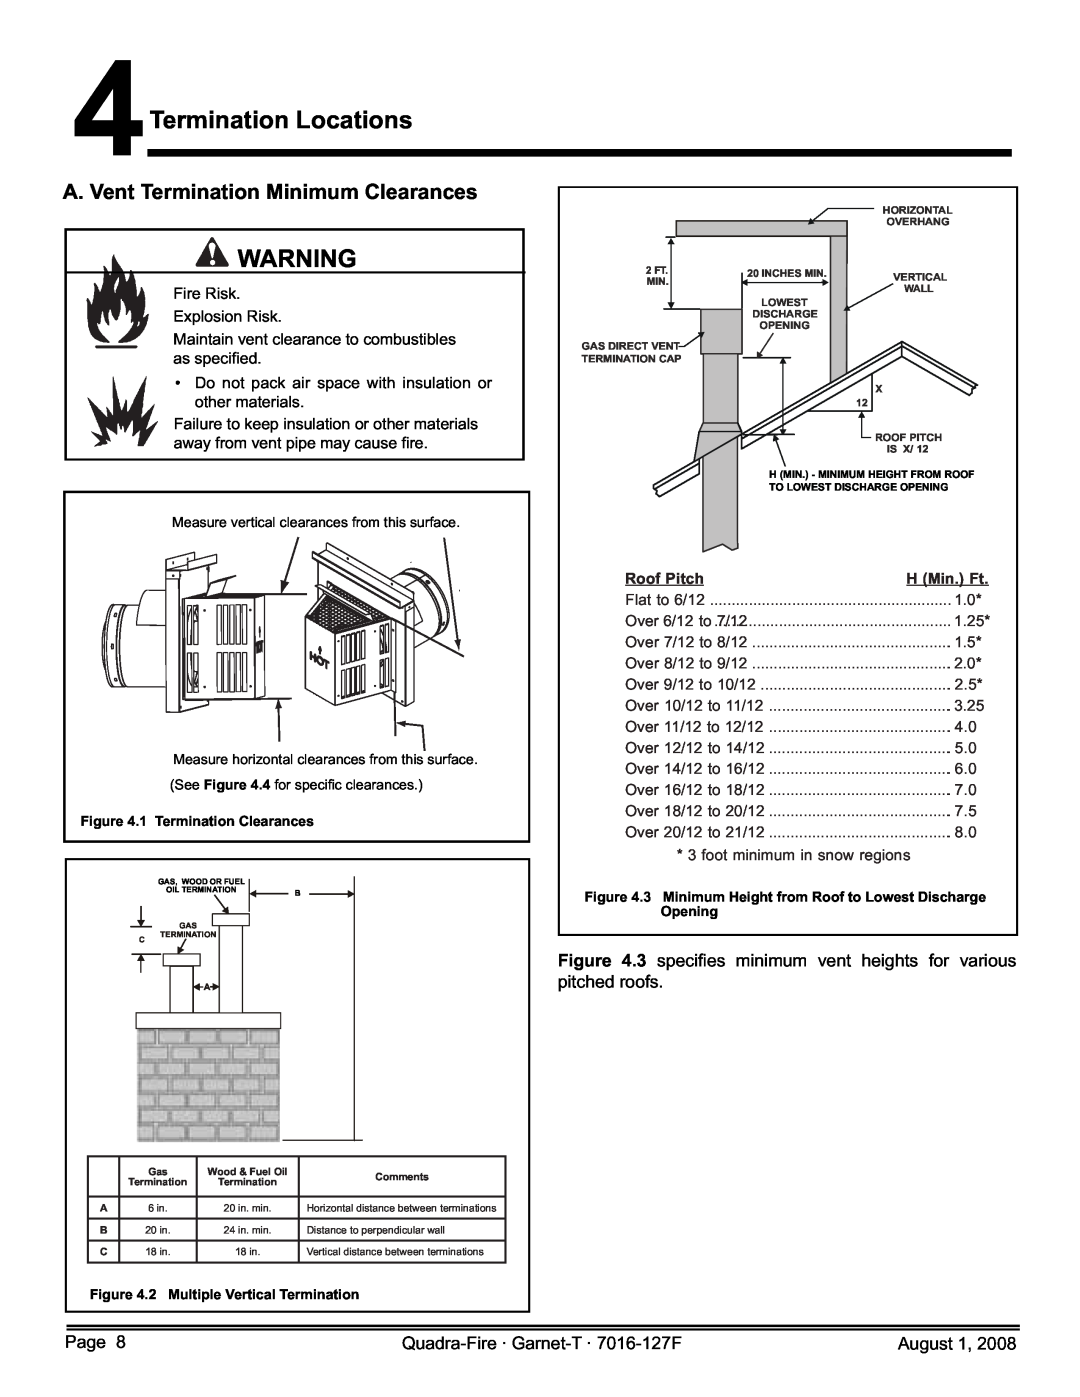 Quadra-Fire GARNET-D-CWL 4Termination Locations, A. Vent Termination Minimum Clearances, Roof Pitch, H Min. Ft, 3.25 